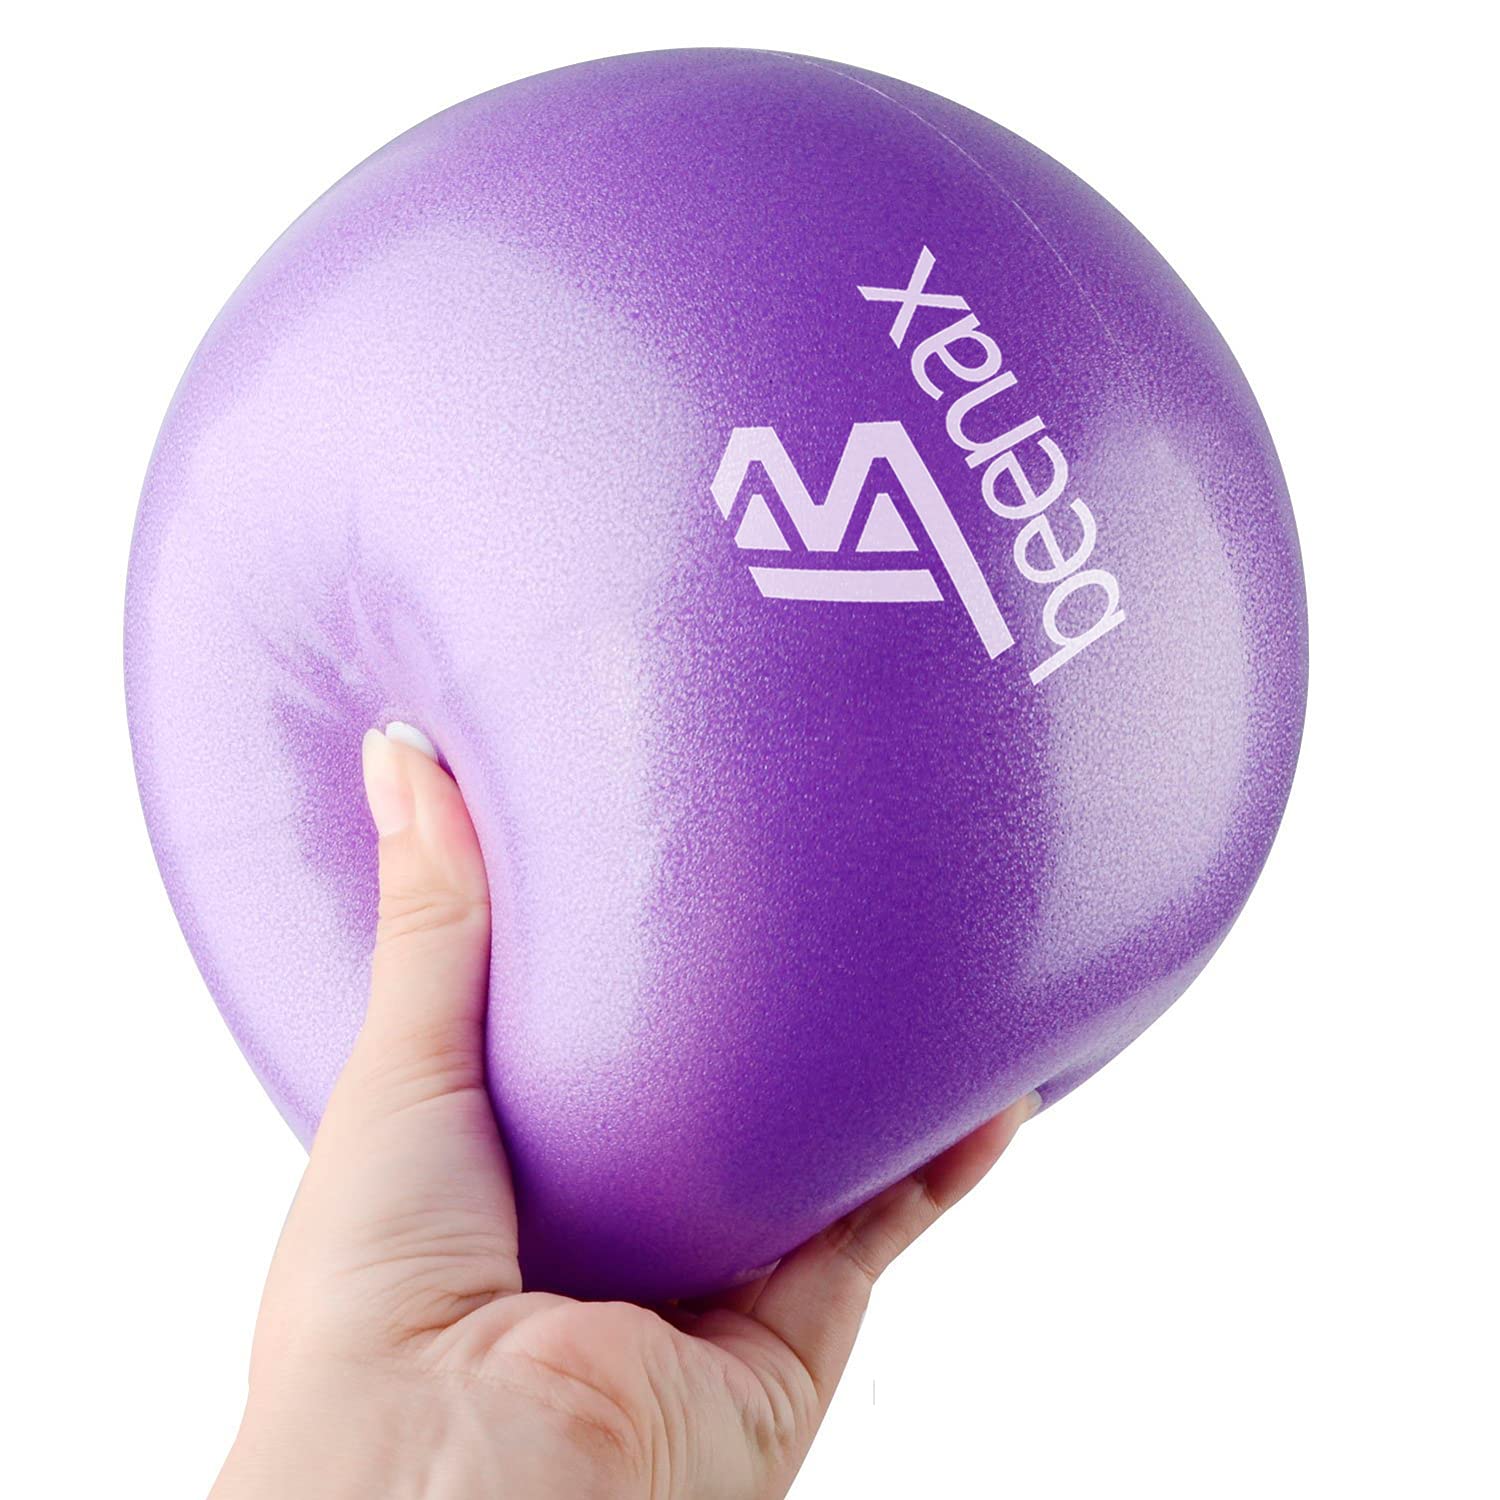 Small size Pilates ball - SoffBall Maxafe® - Tonkey - large size / adult